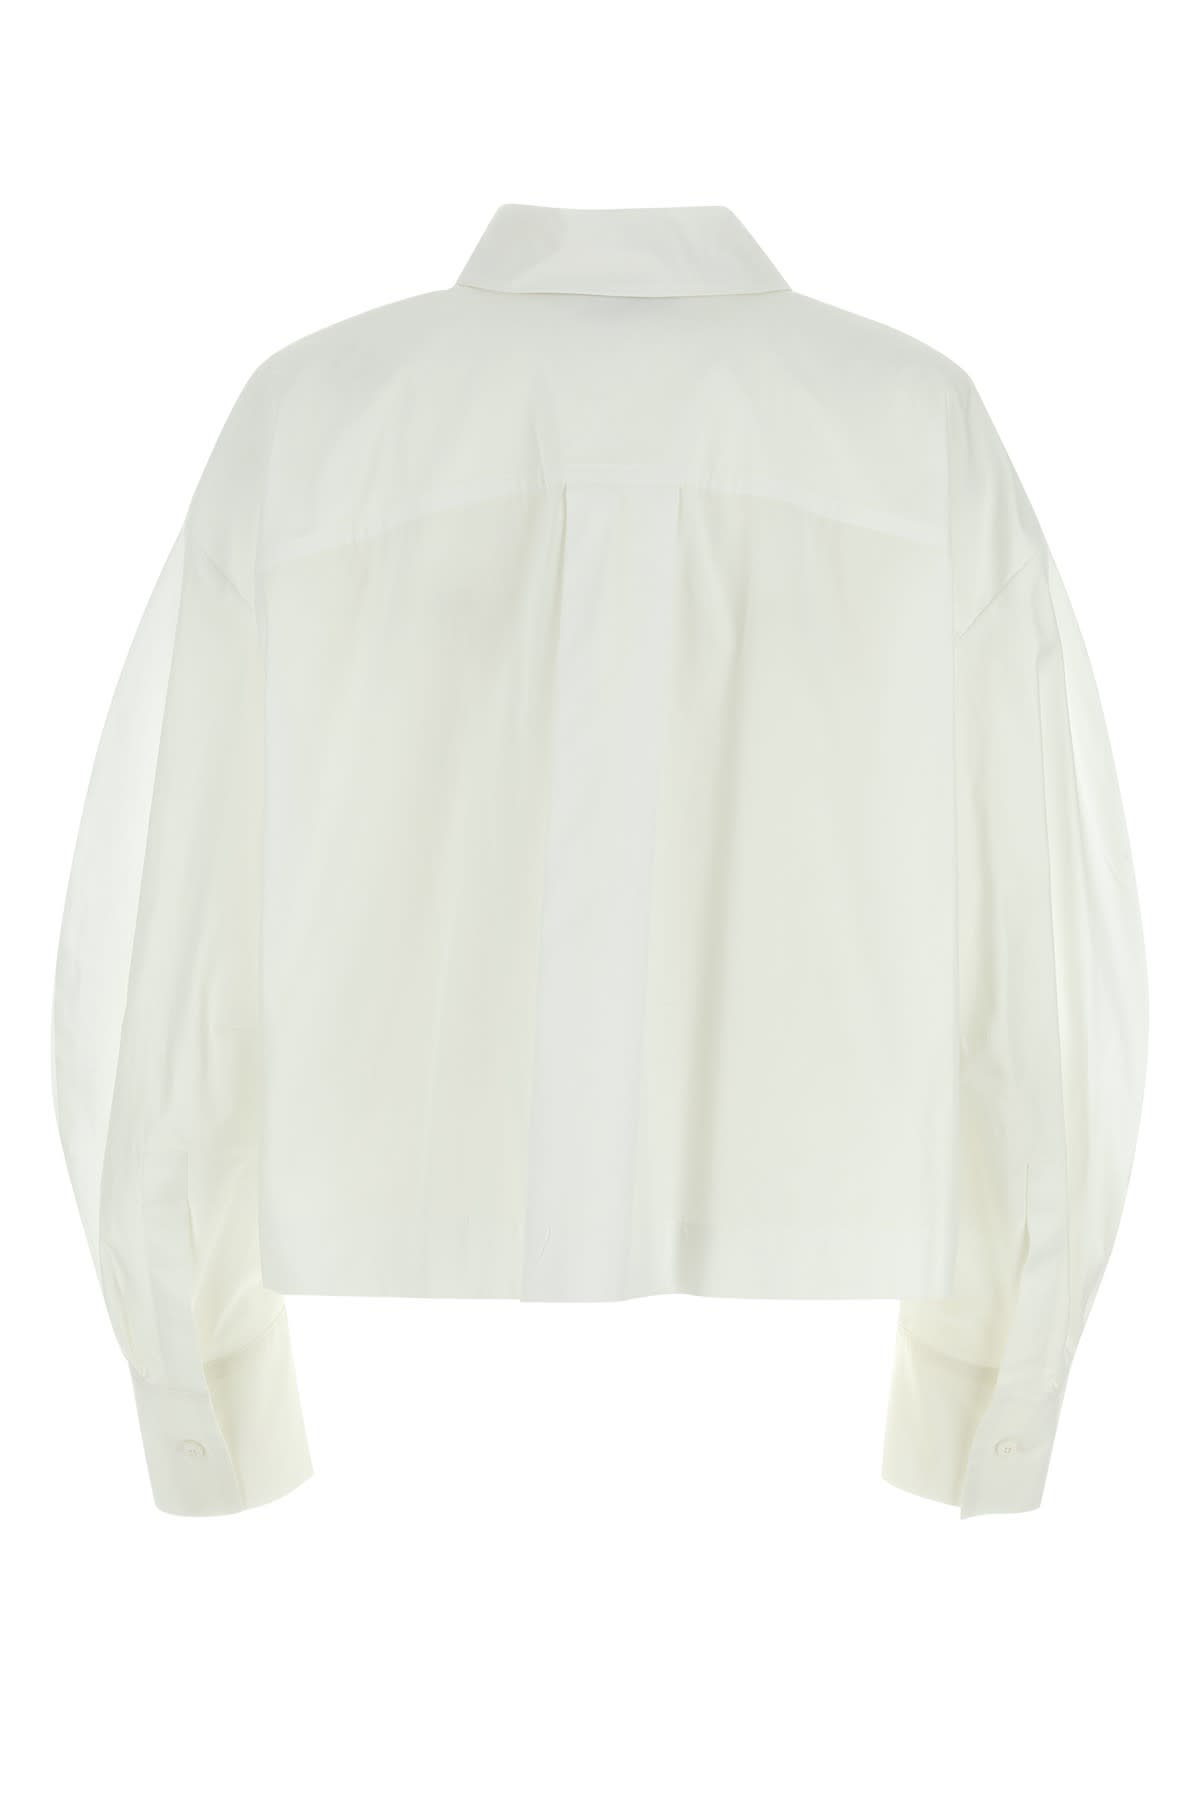 Attico White Poplin Oversize Jill Shirt